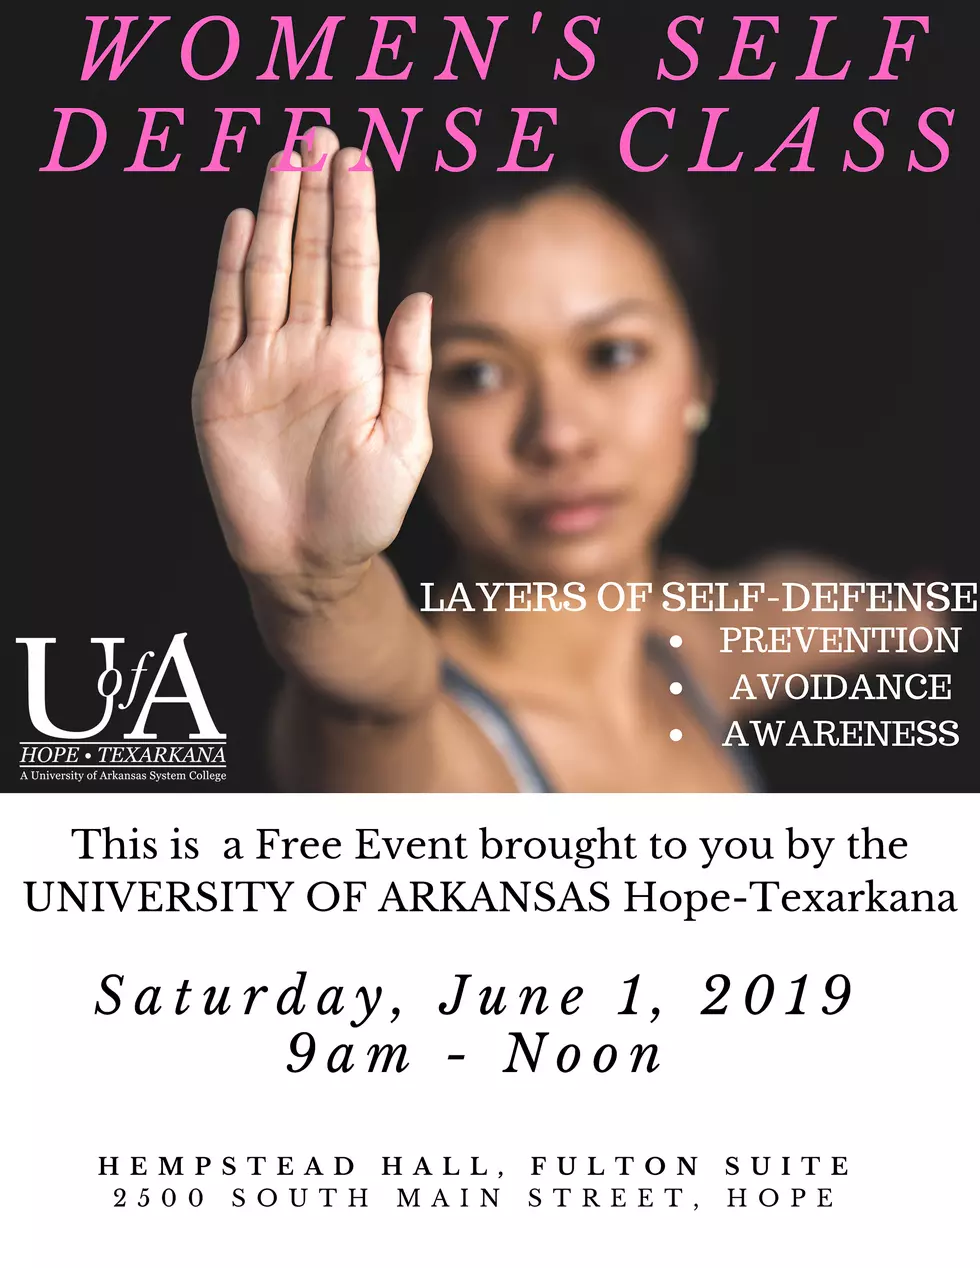 Women’s Self Defense Class Offered at University of Arkansas – Hope/Texarkana